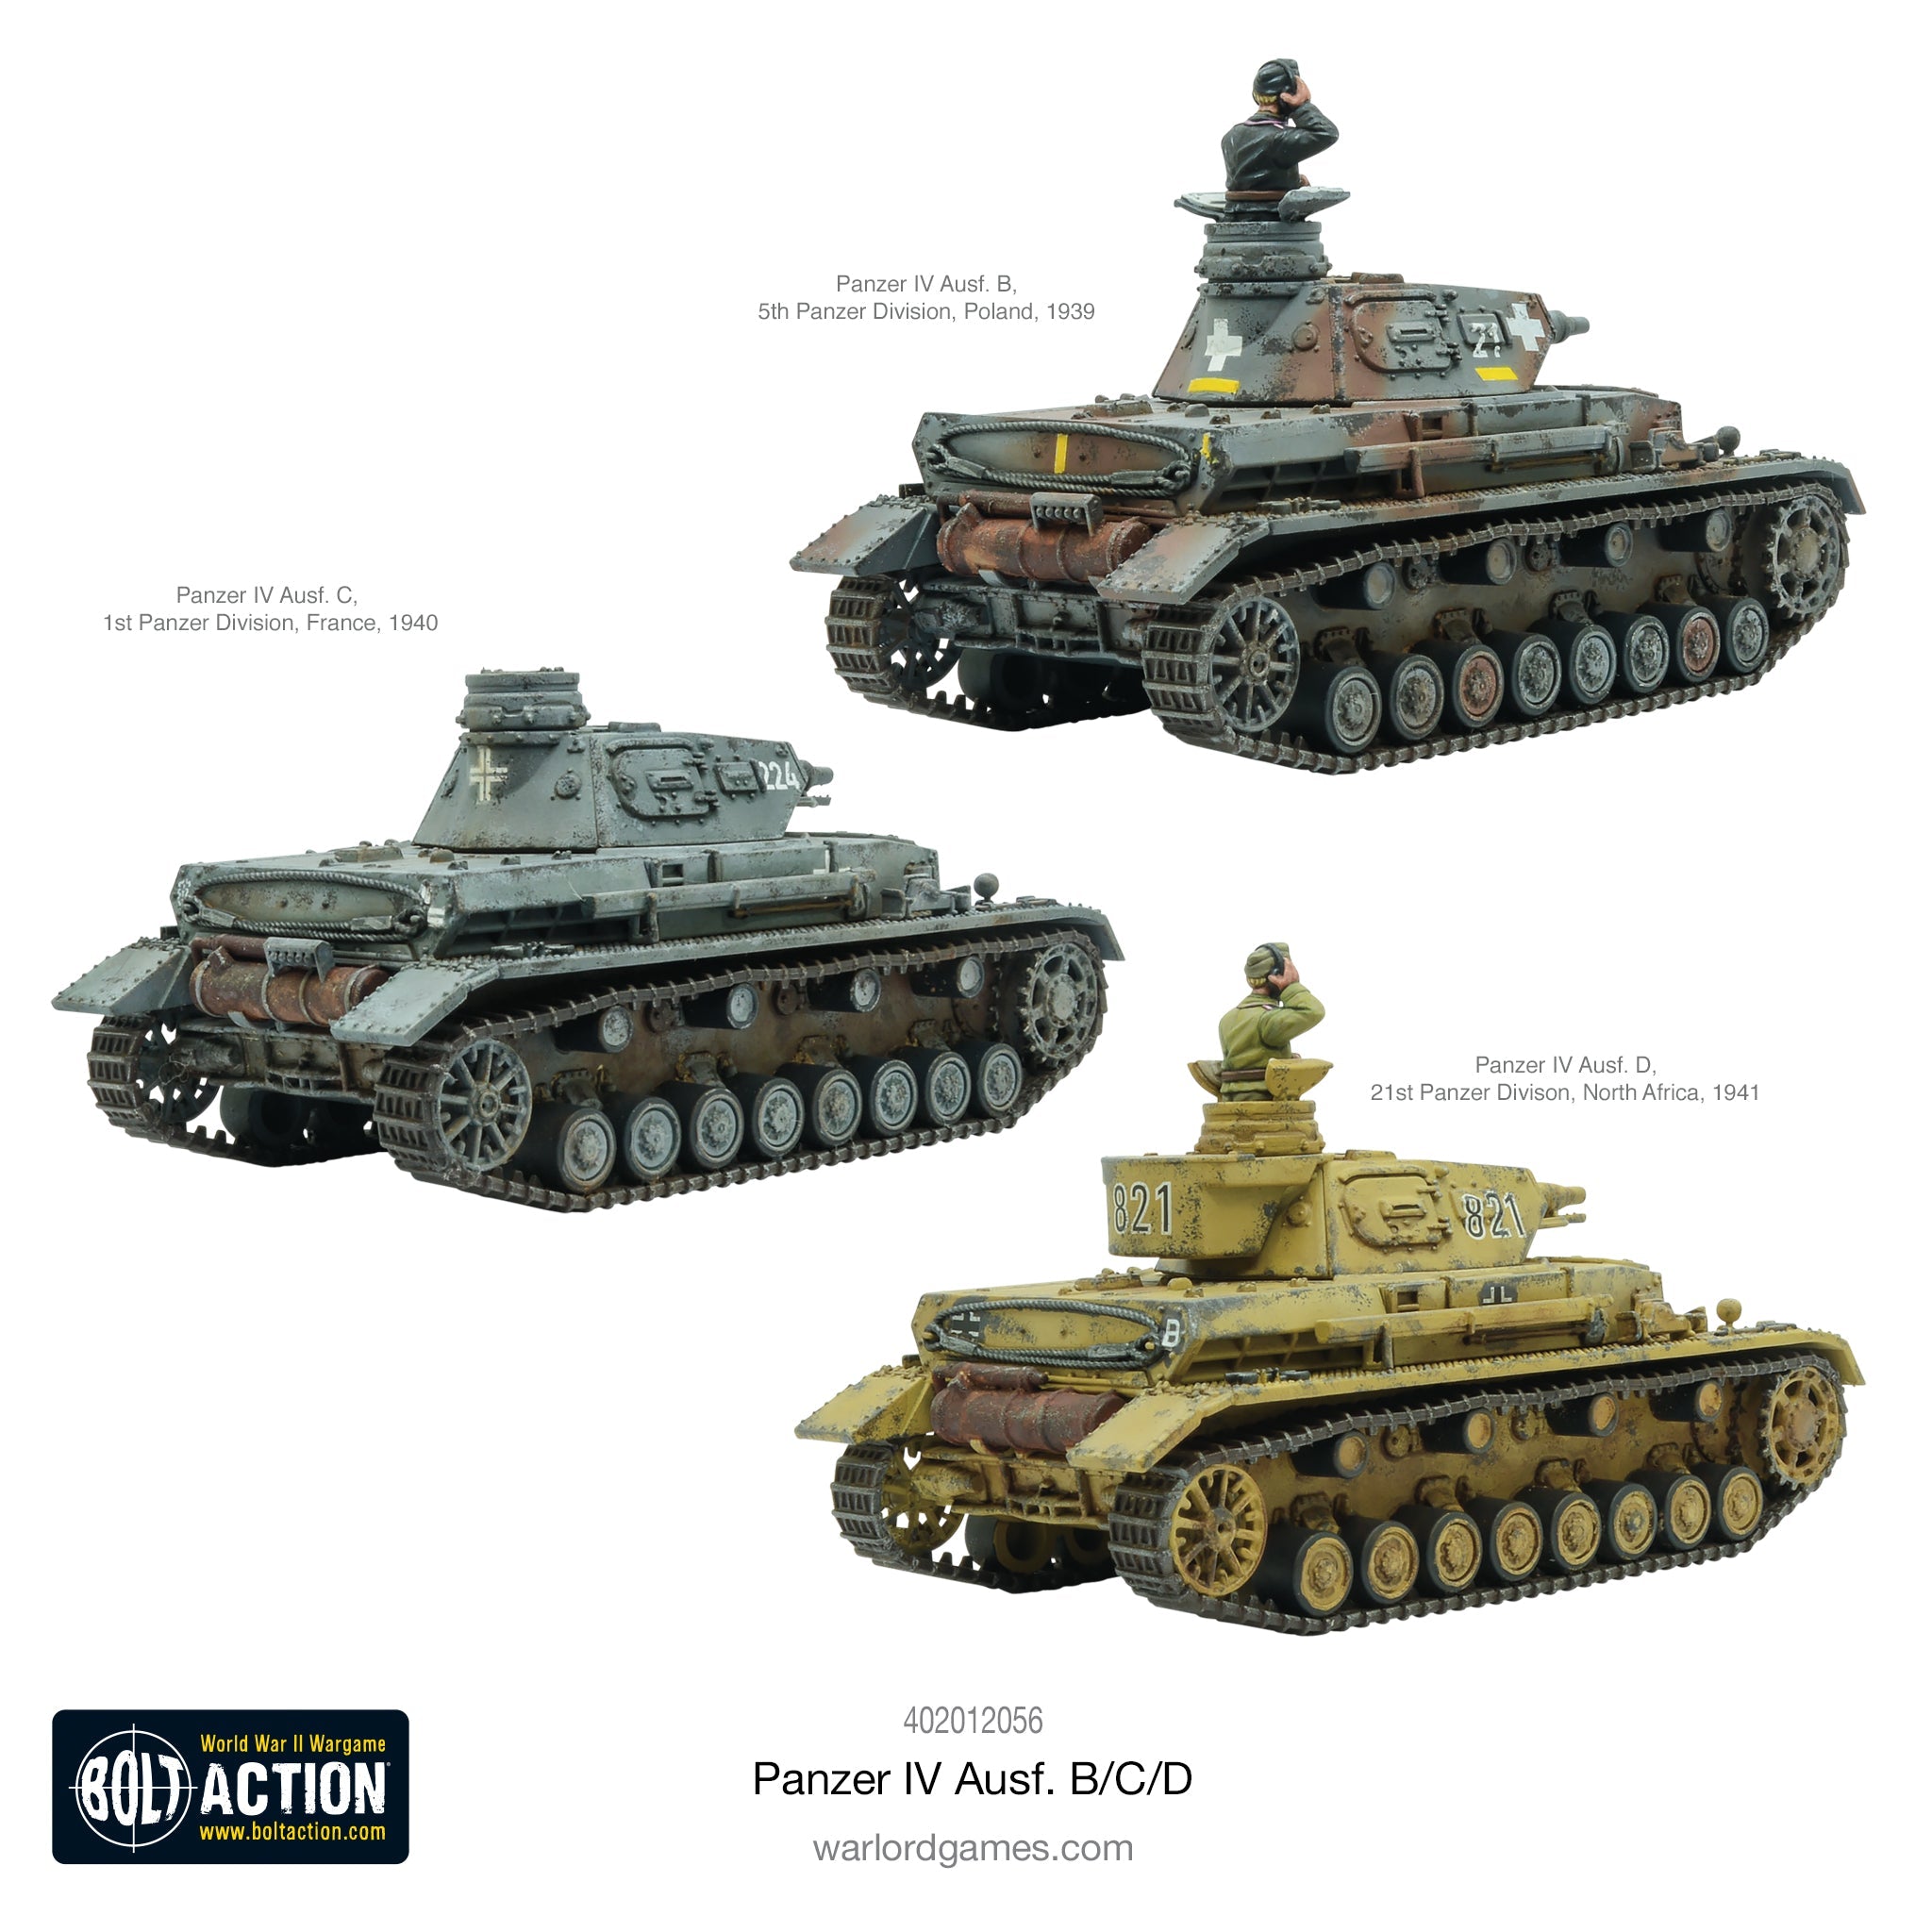 Panzer IV Ausf. B/C/D